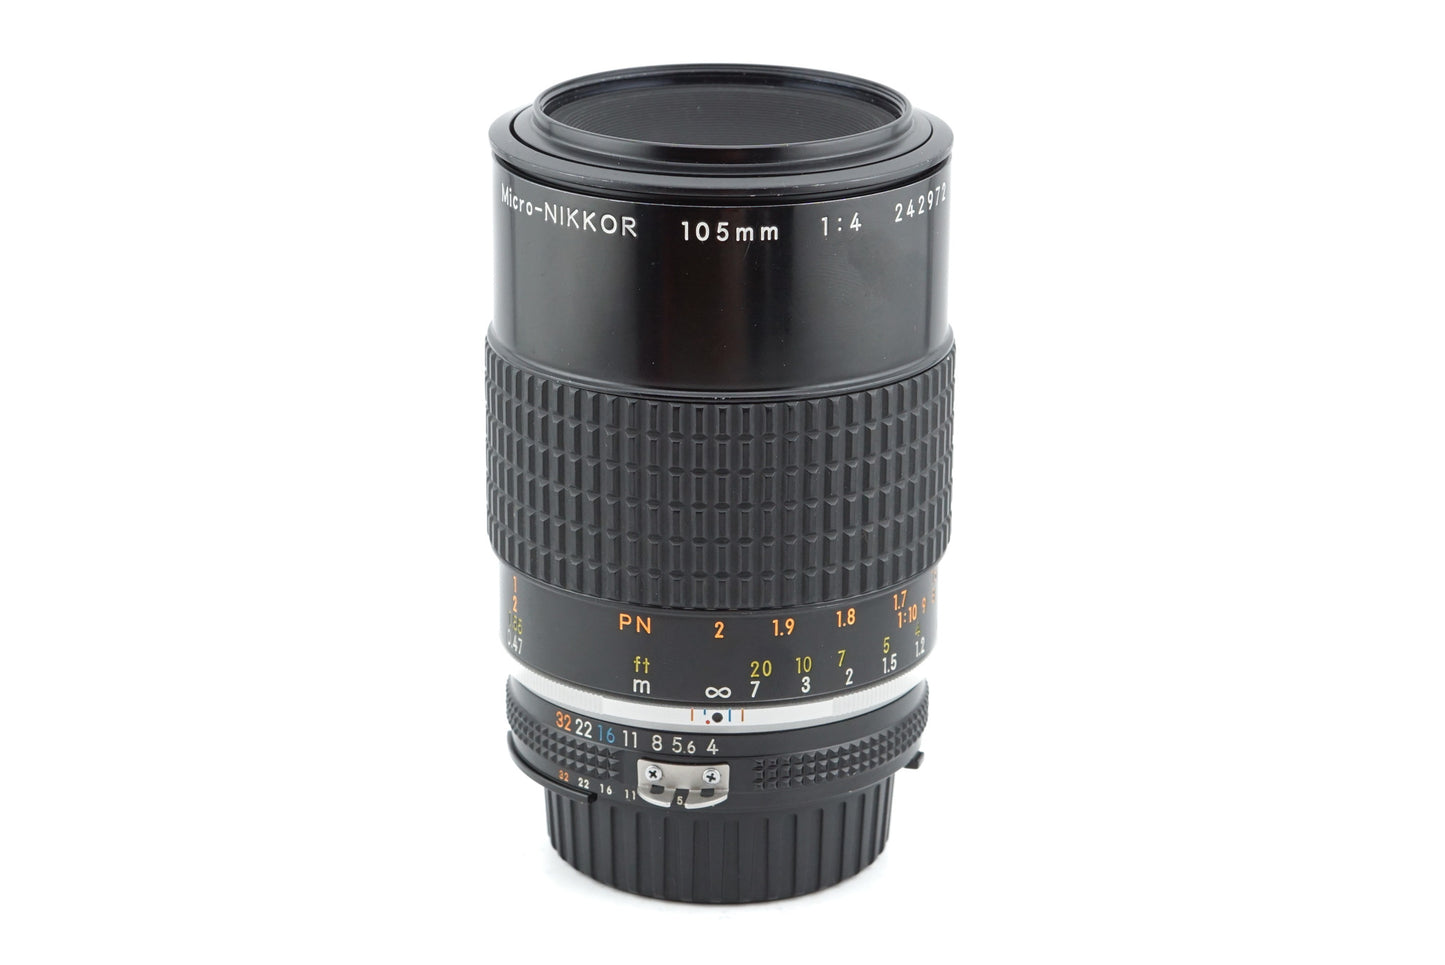 Nikon 105mm f4 Micro-Nikkor AI-S - Lens